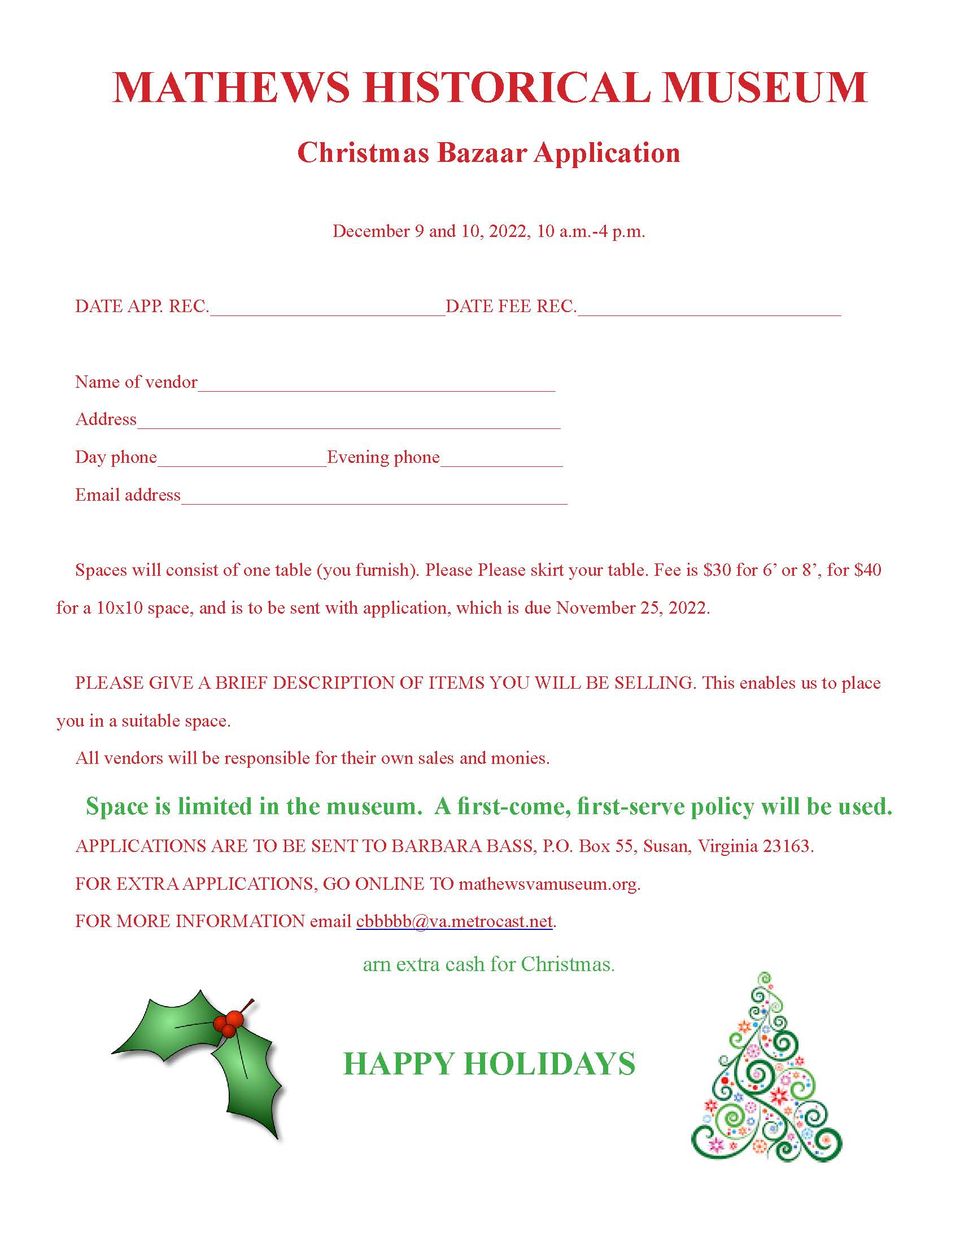 Christmas bazaar application 2022